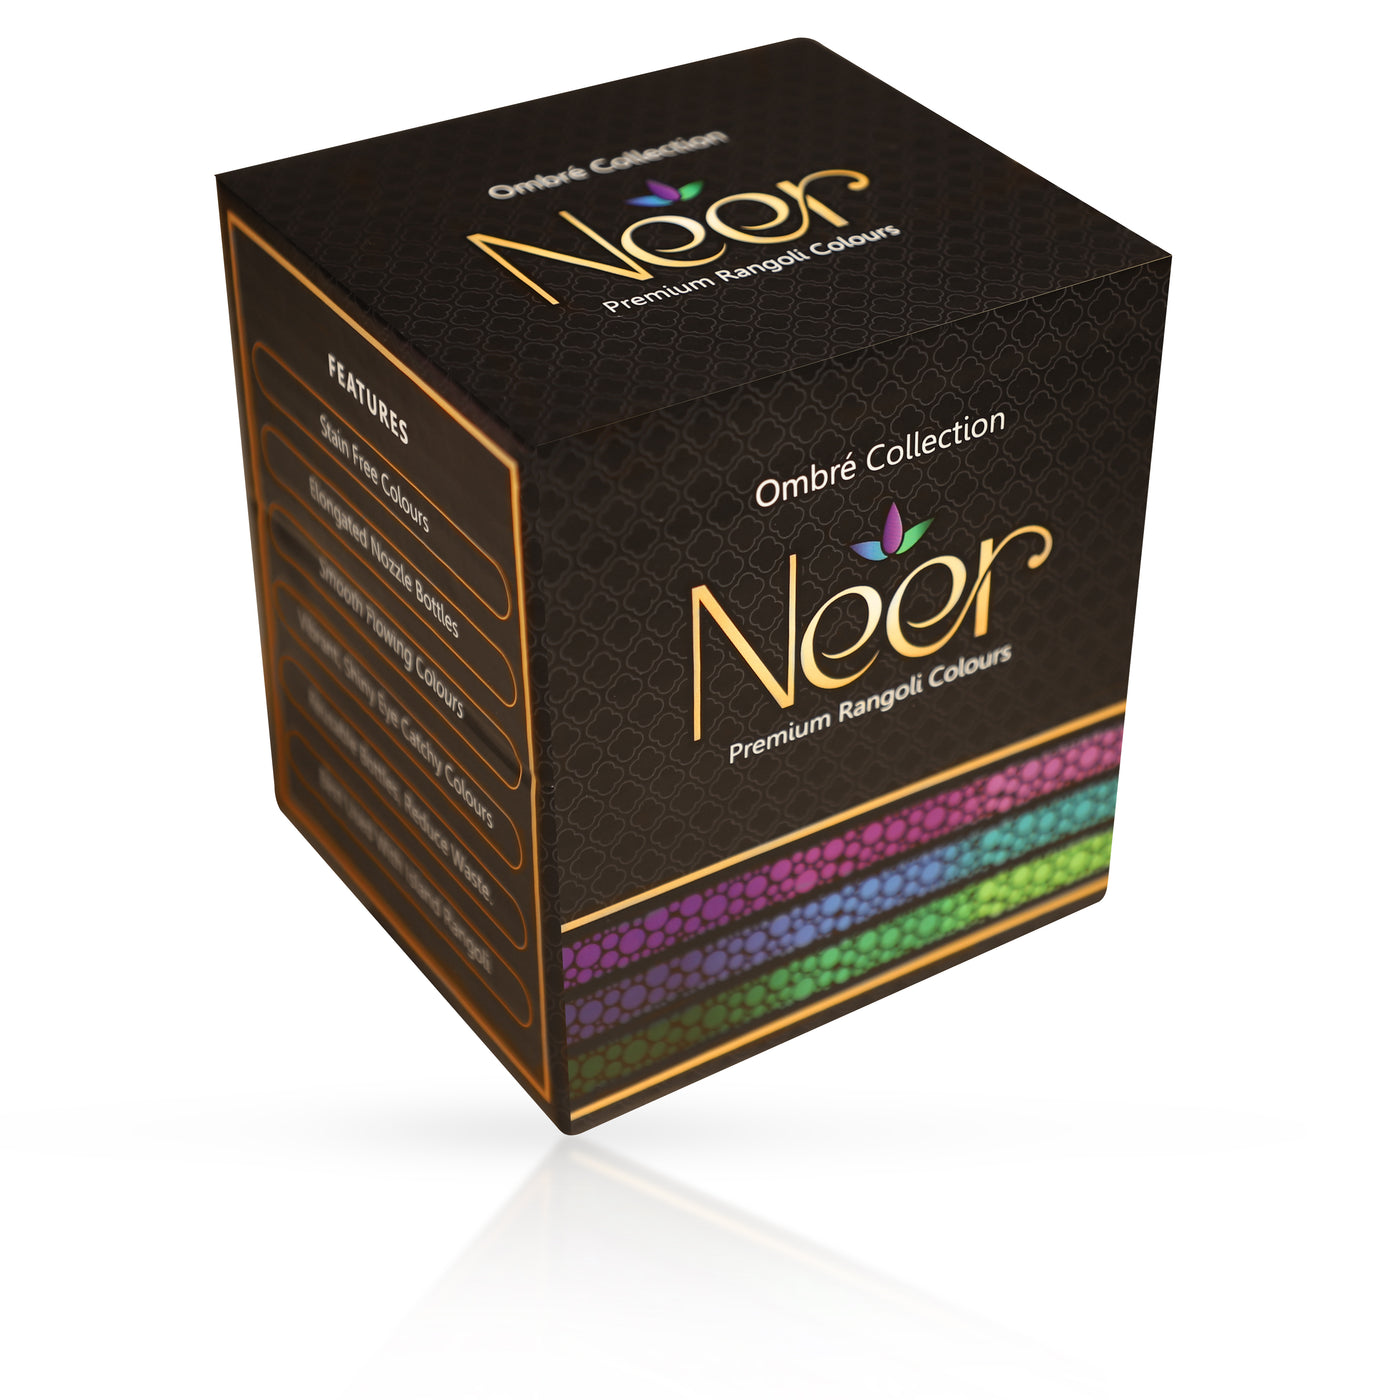 Neer Premium Rangoli Colours , Product from island rangoli